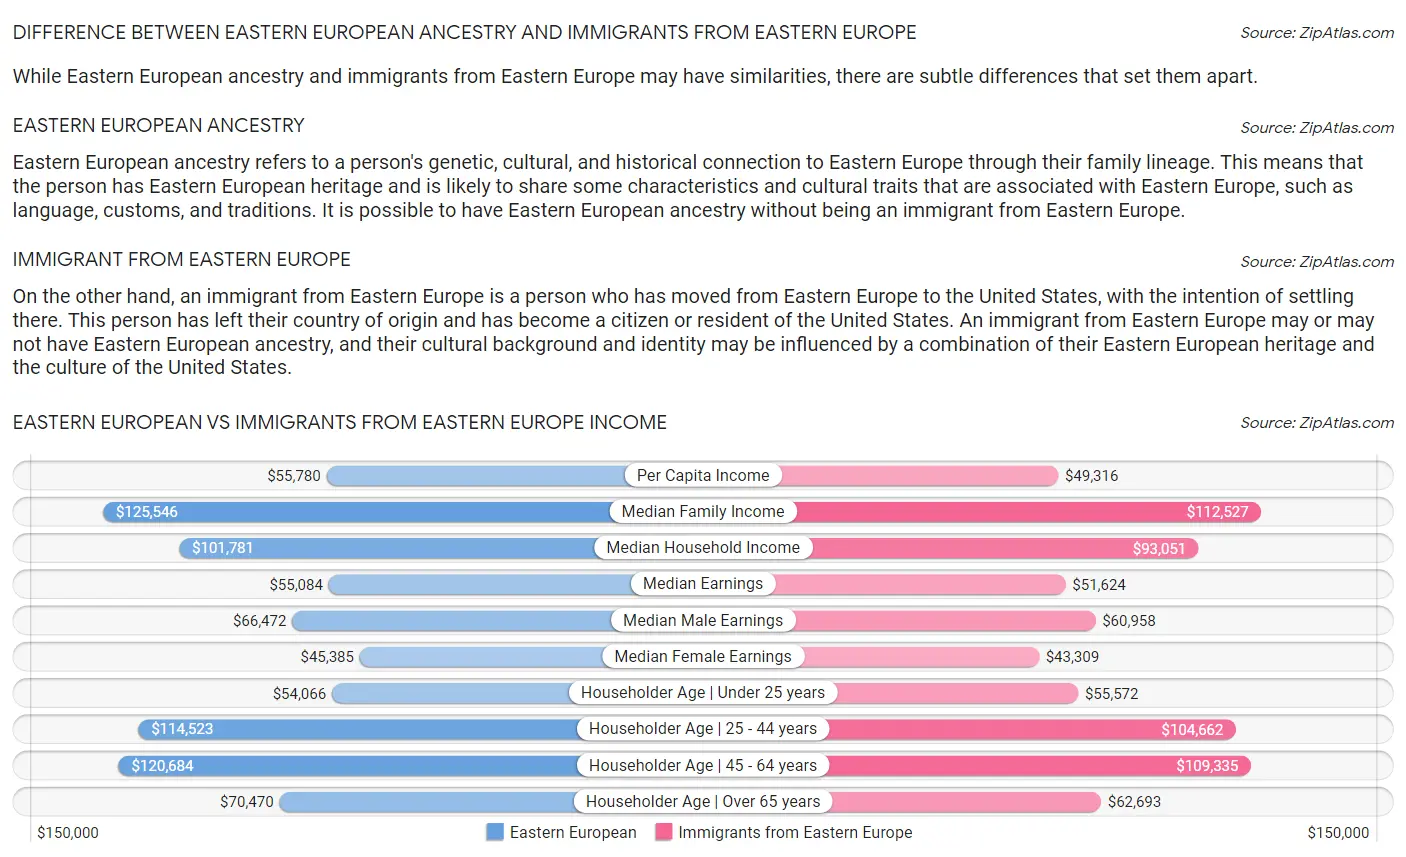 Eastern European vs Immigrants from Eastern Europe Income